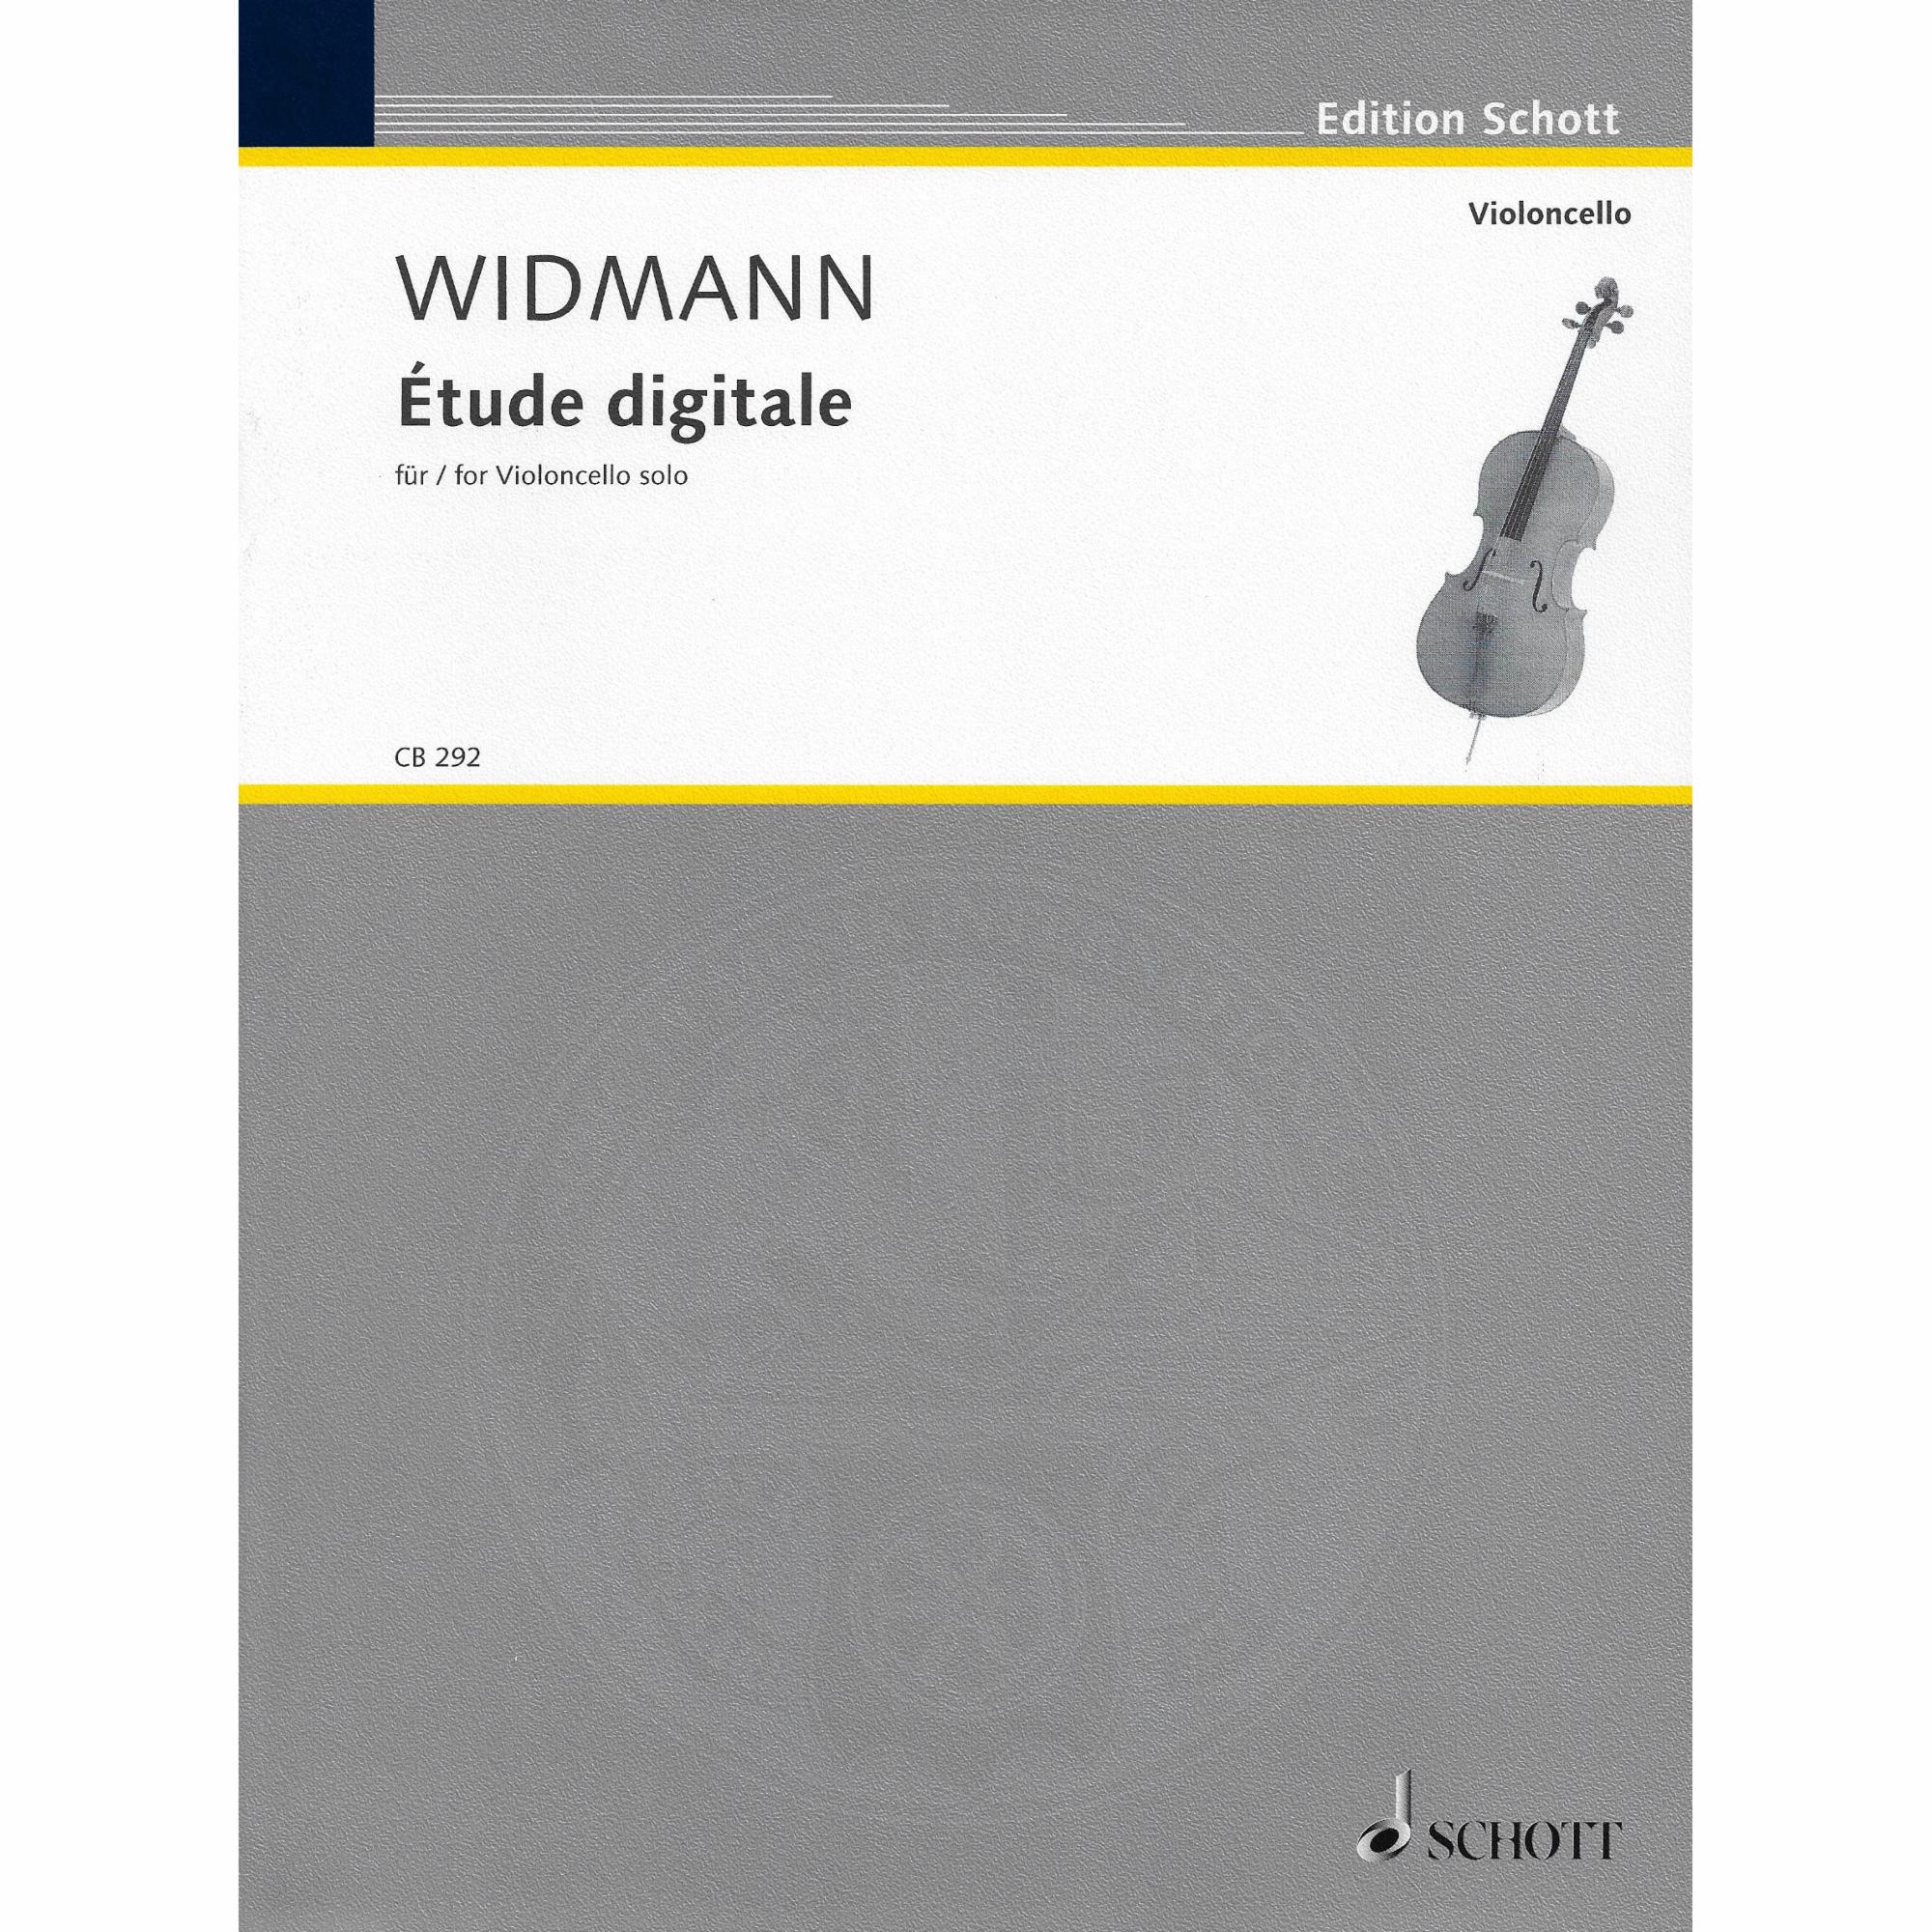 Widmann -- Etude digitale for Solo Cello